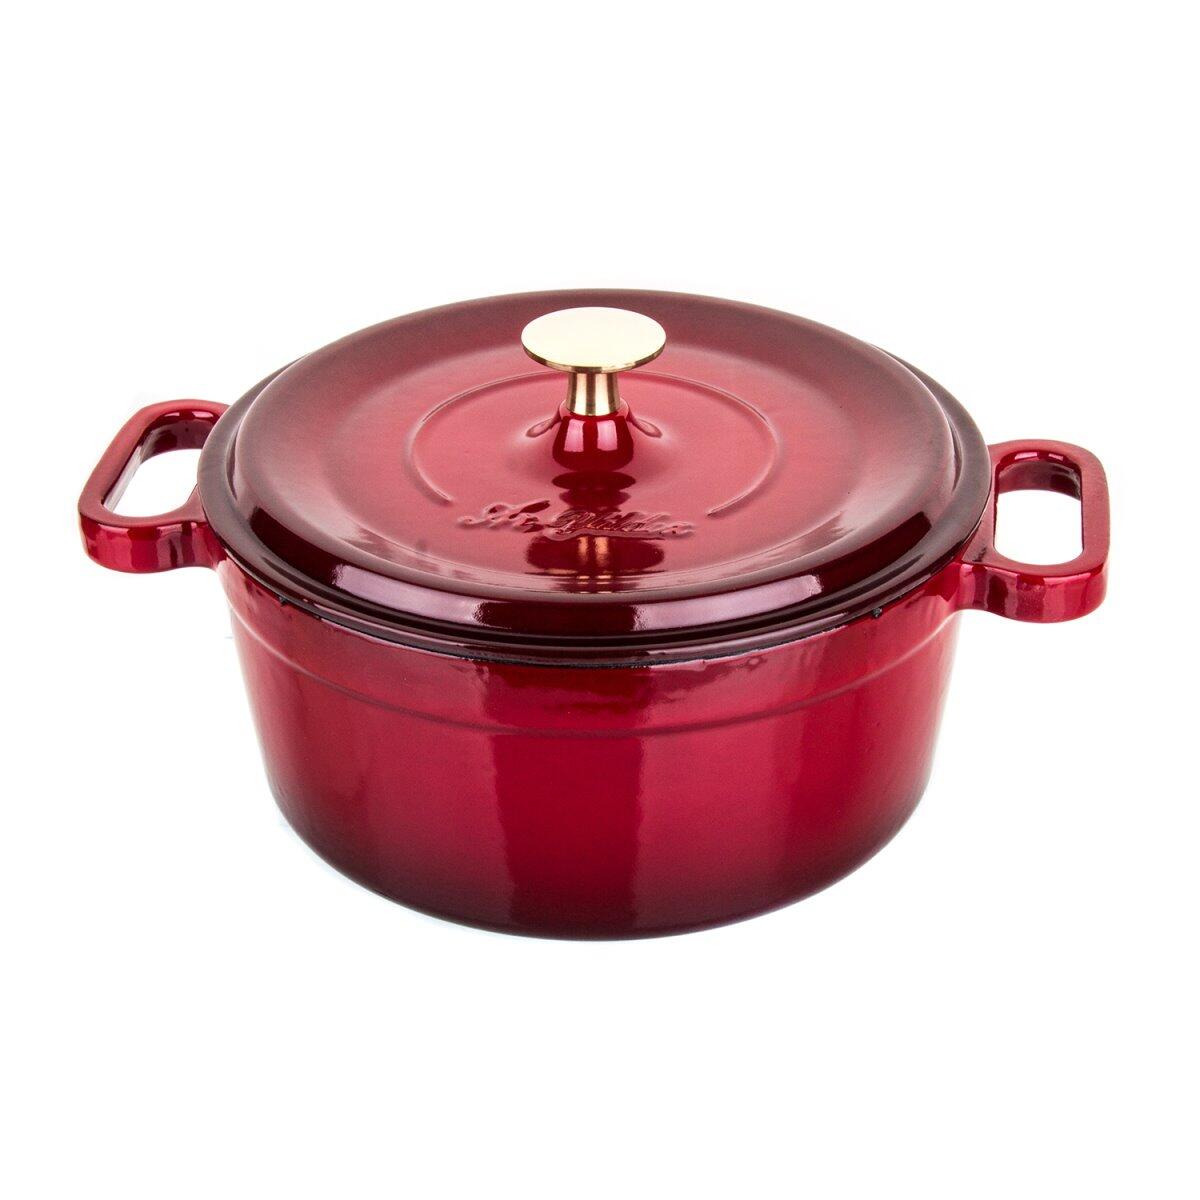 Aryıldız Cast Iron Pot 20 Cm Red